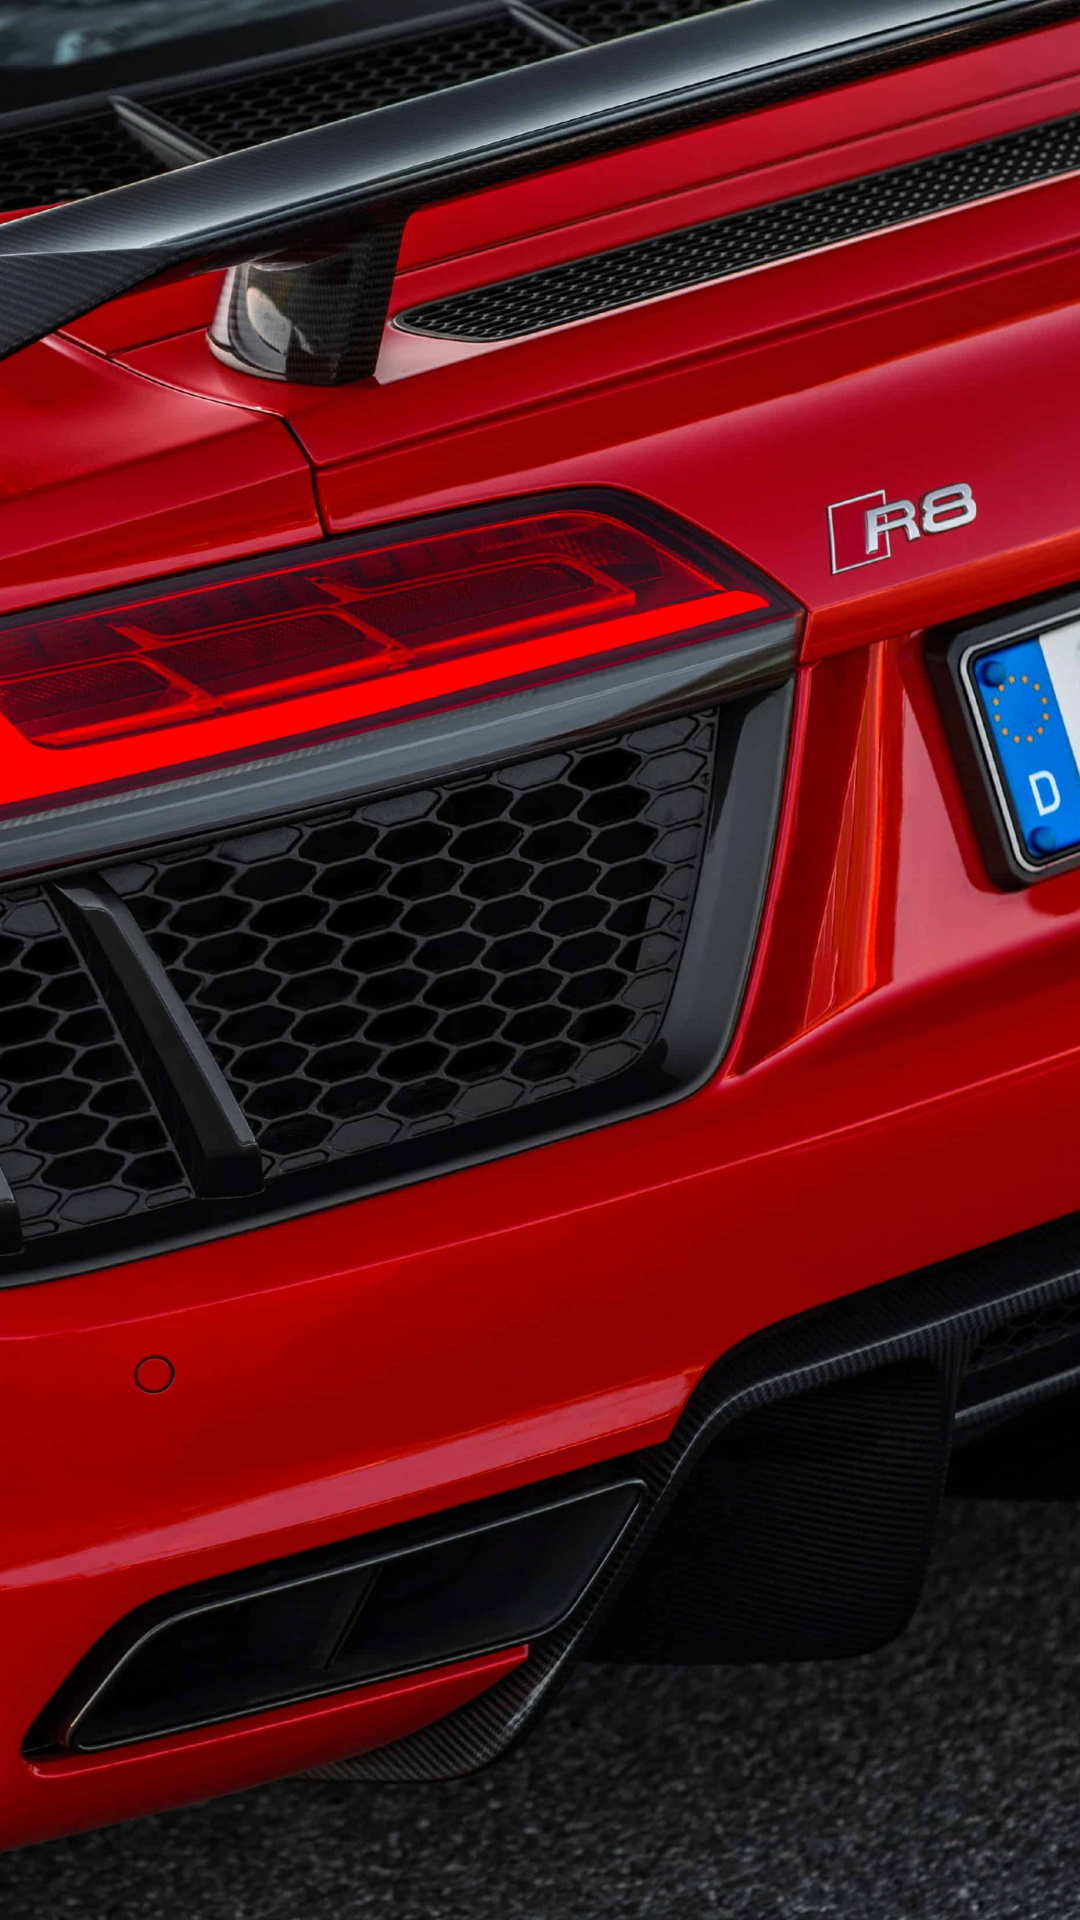 Audi, V10 Engine, Car, Audi R8 V10 Plus 2017 Rear, - Audi R8 Wallpaper Iphone , HD Wallpaper & Backgrounds